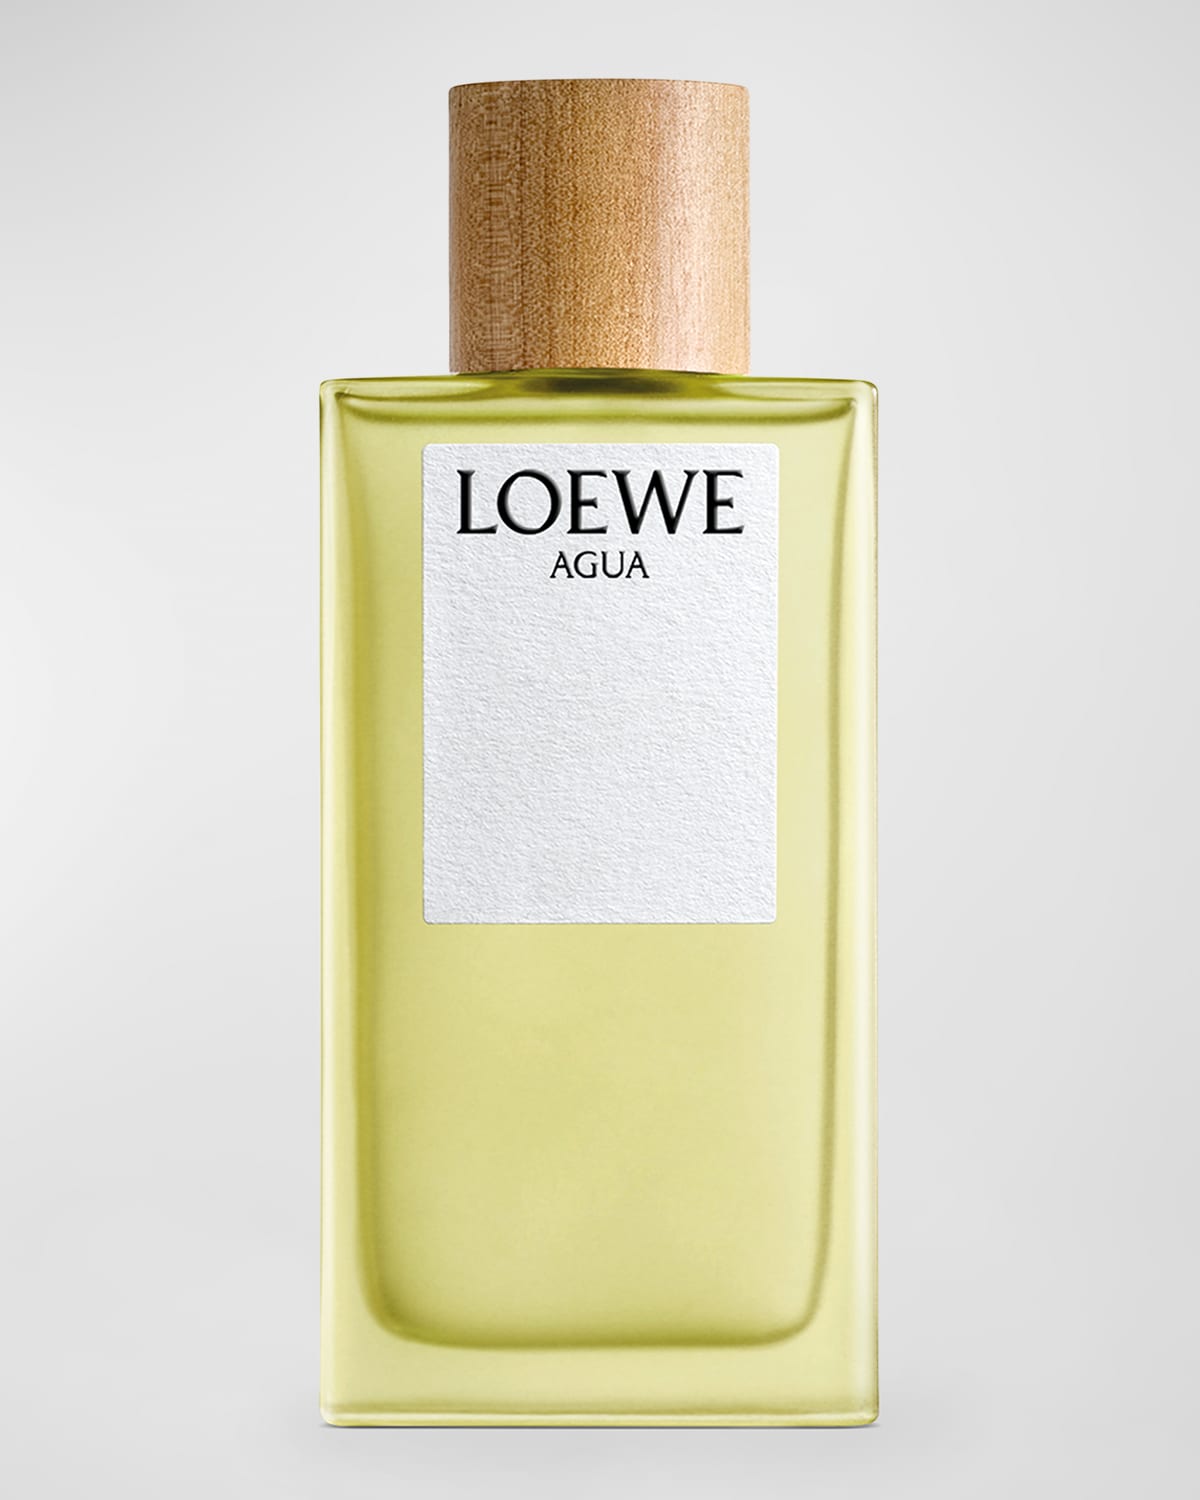 Loewe Agua Eau De Toilette, 5.0 Oz.